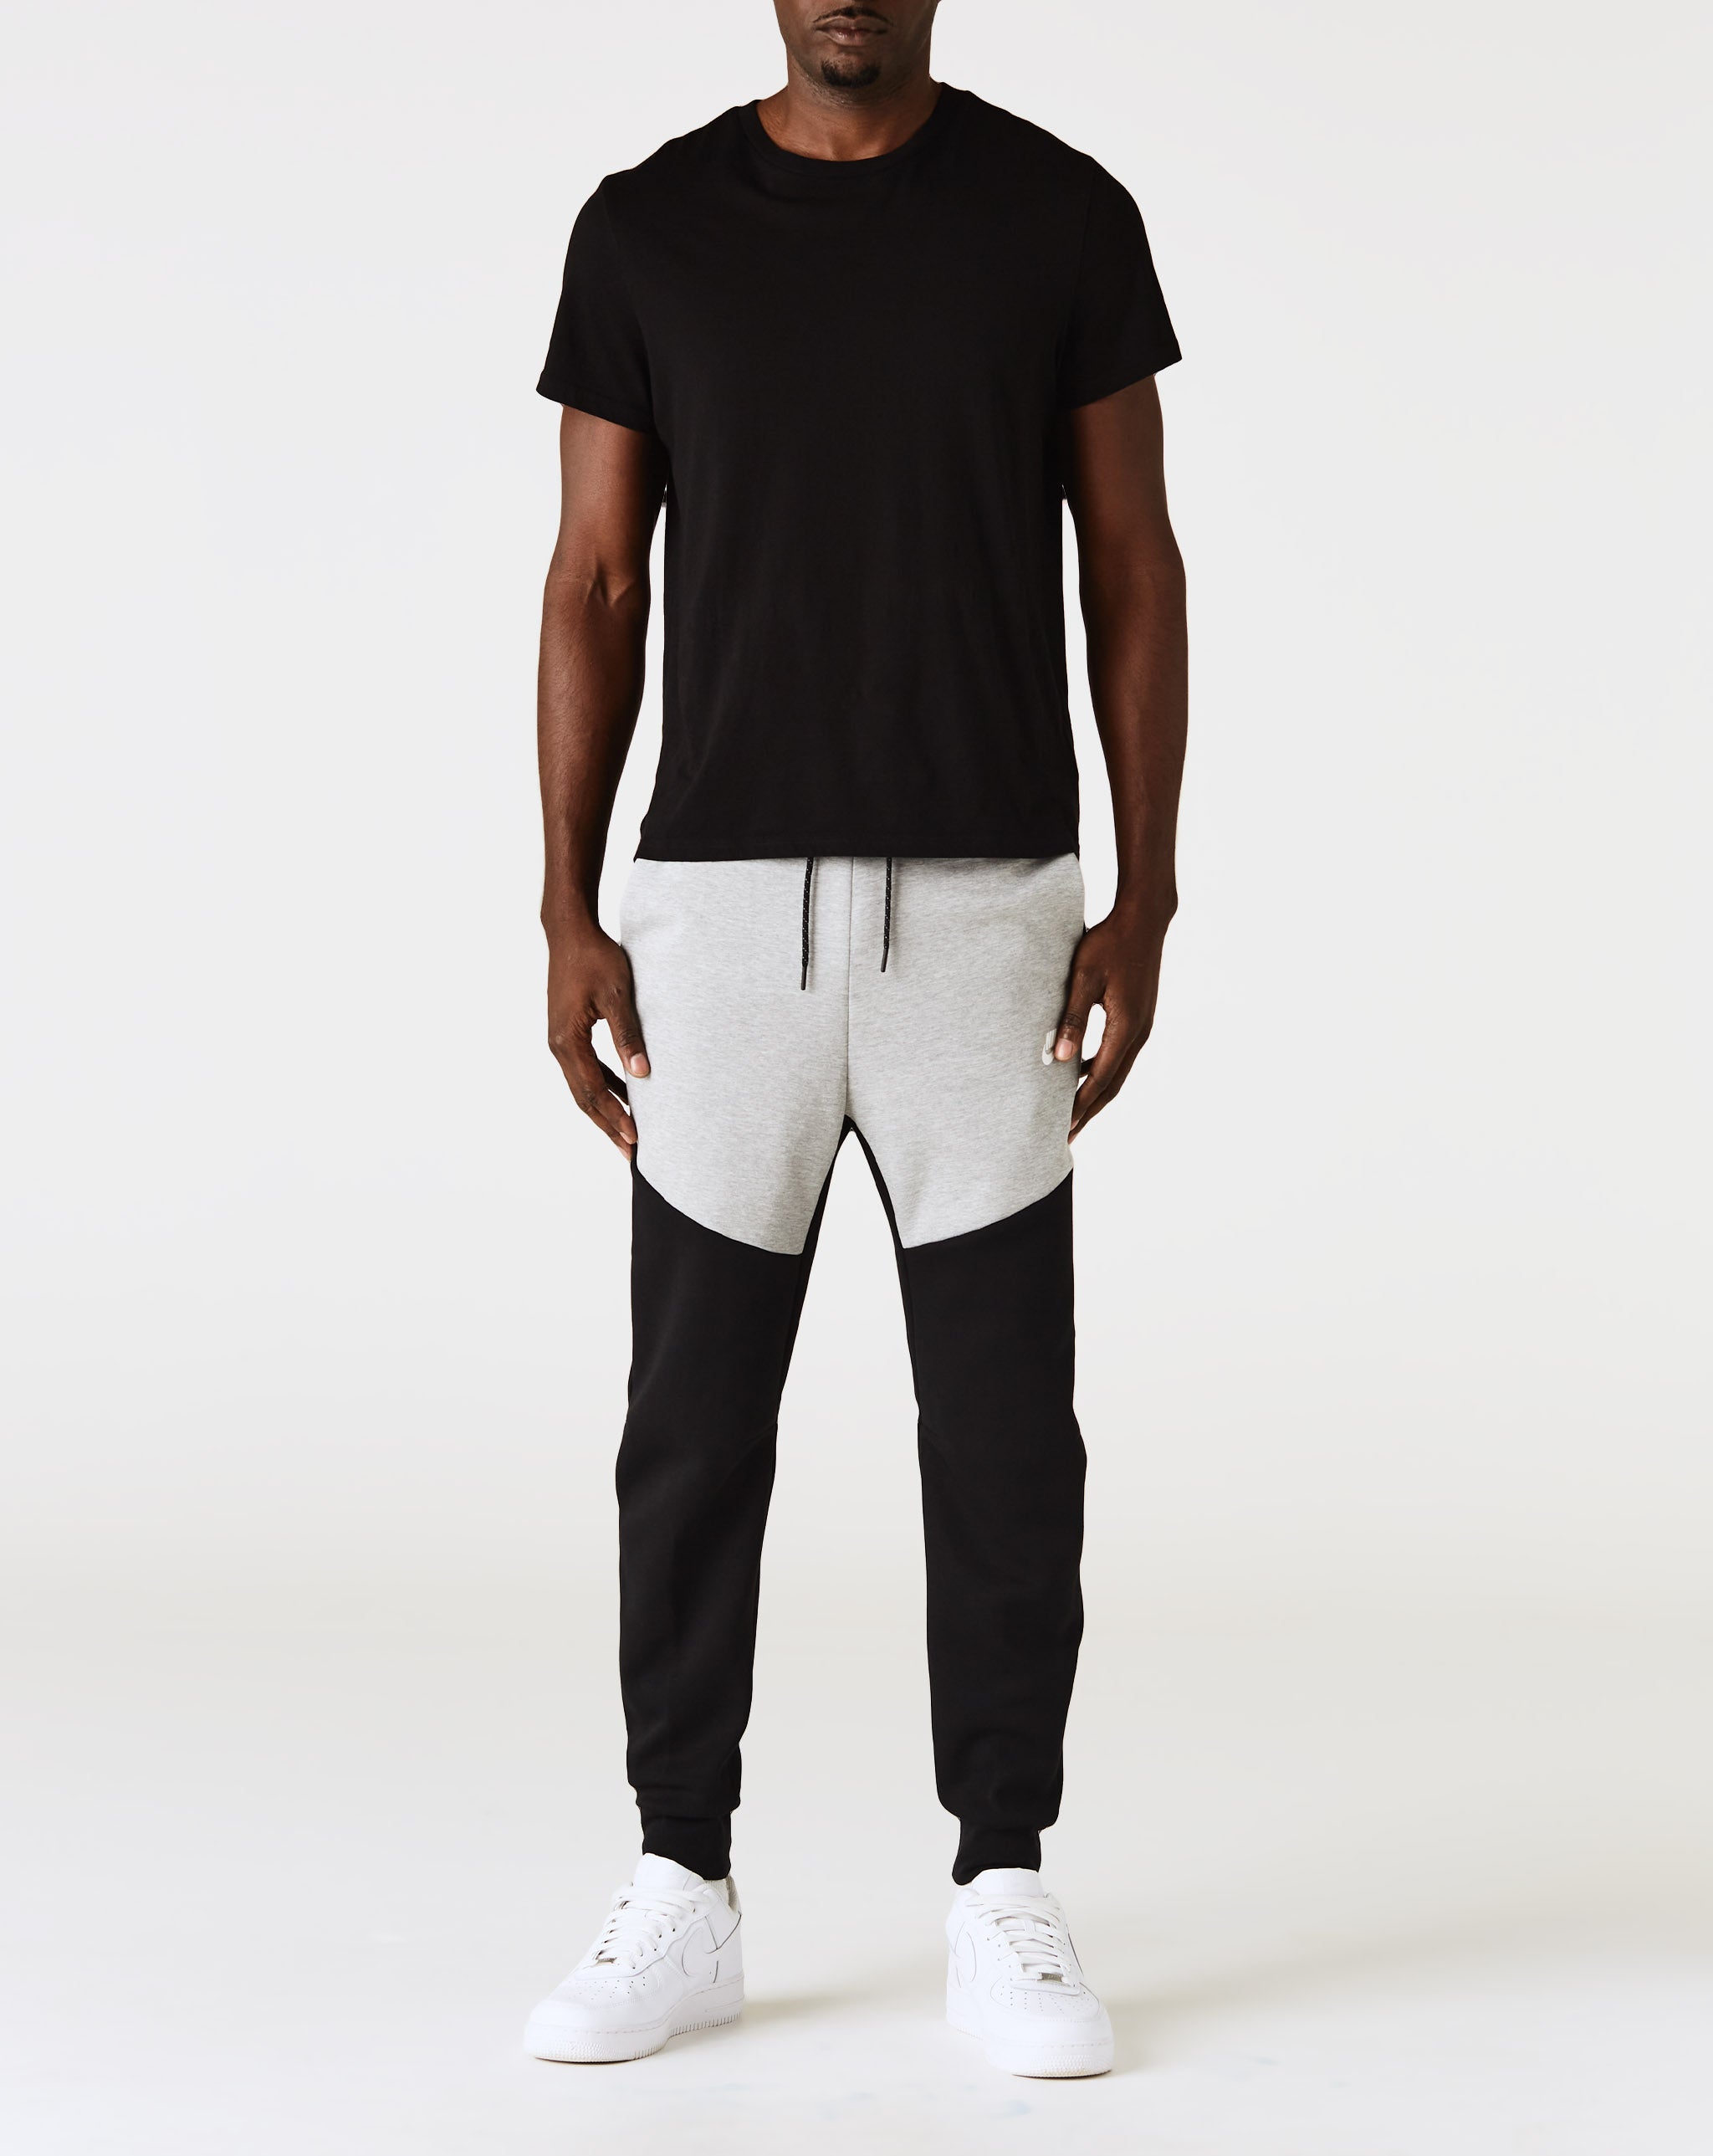 Nike - Tech Fleece Pants - Black | Dark Grey Heather | White 